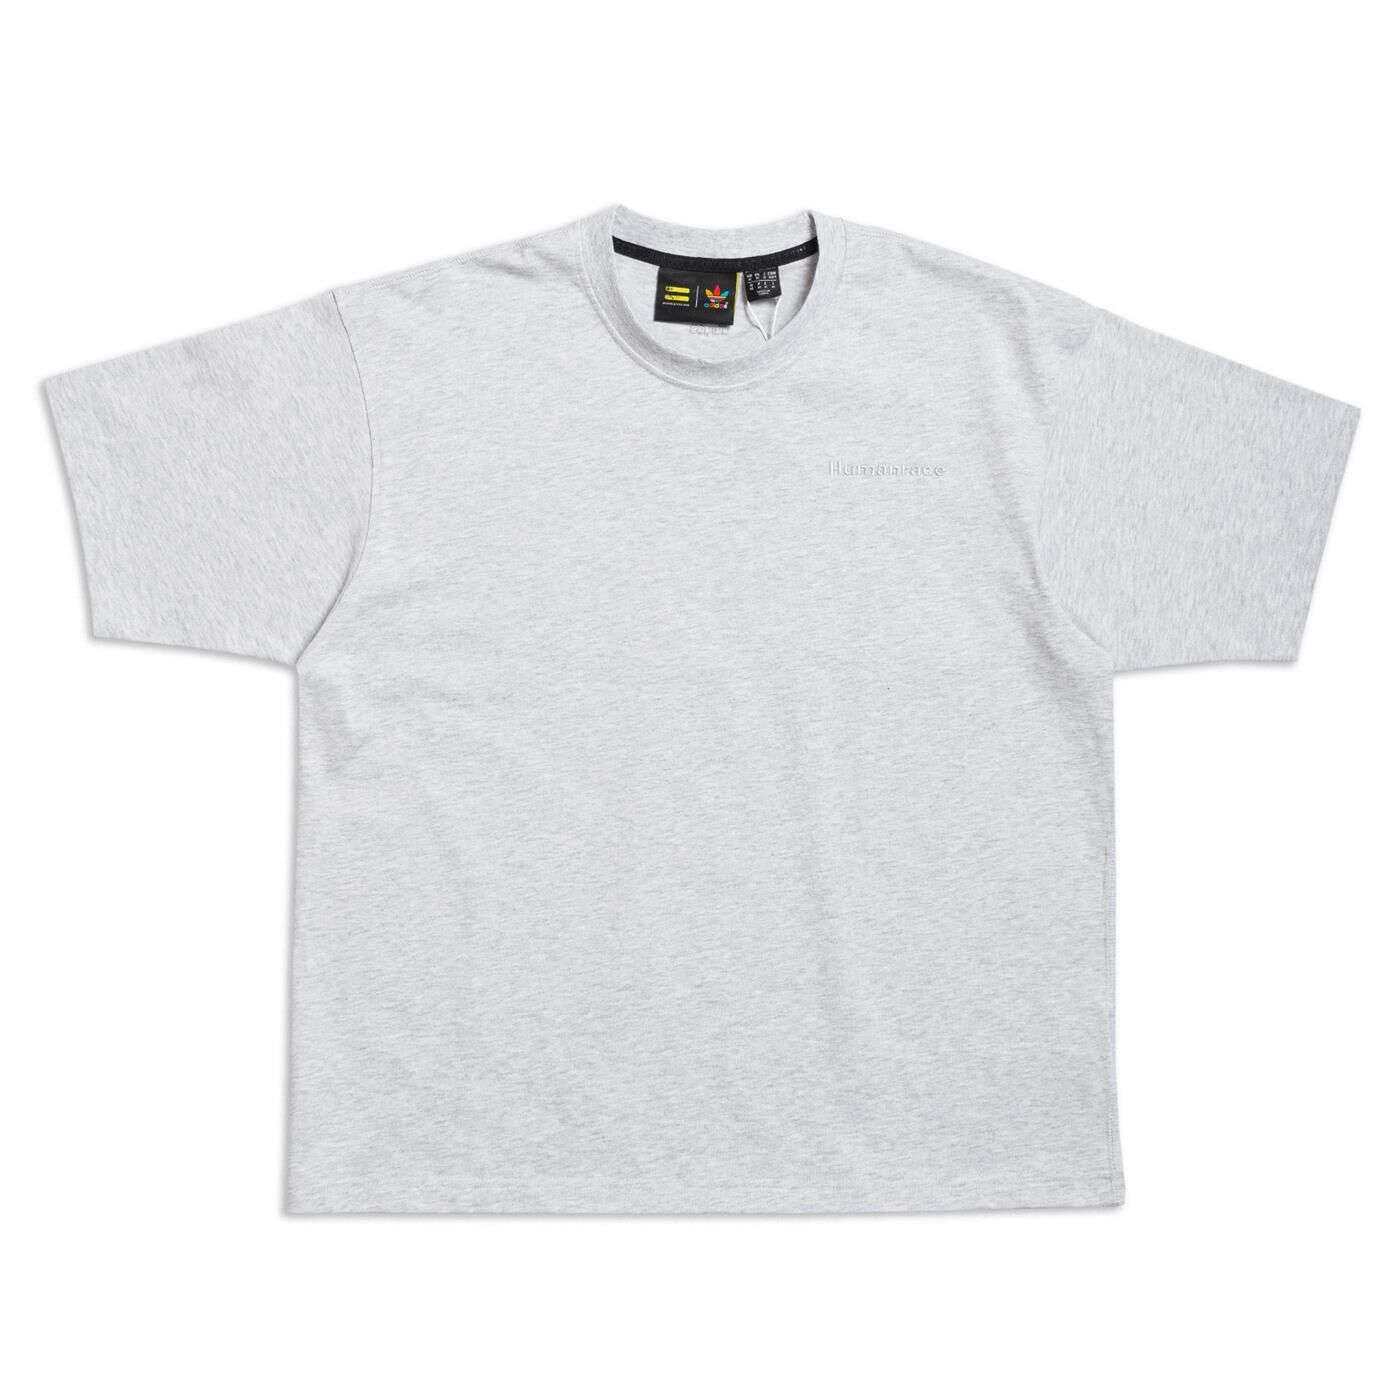 Adidas Pharrell Williams Basics T-shirt